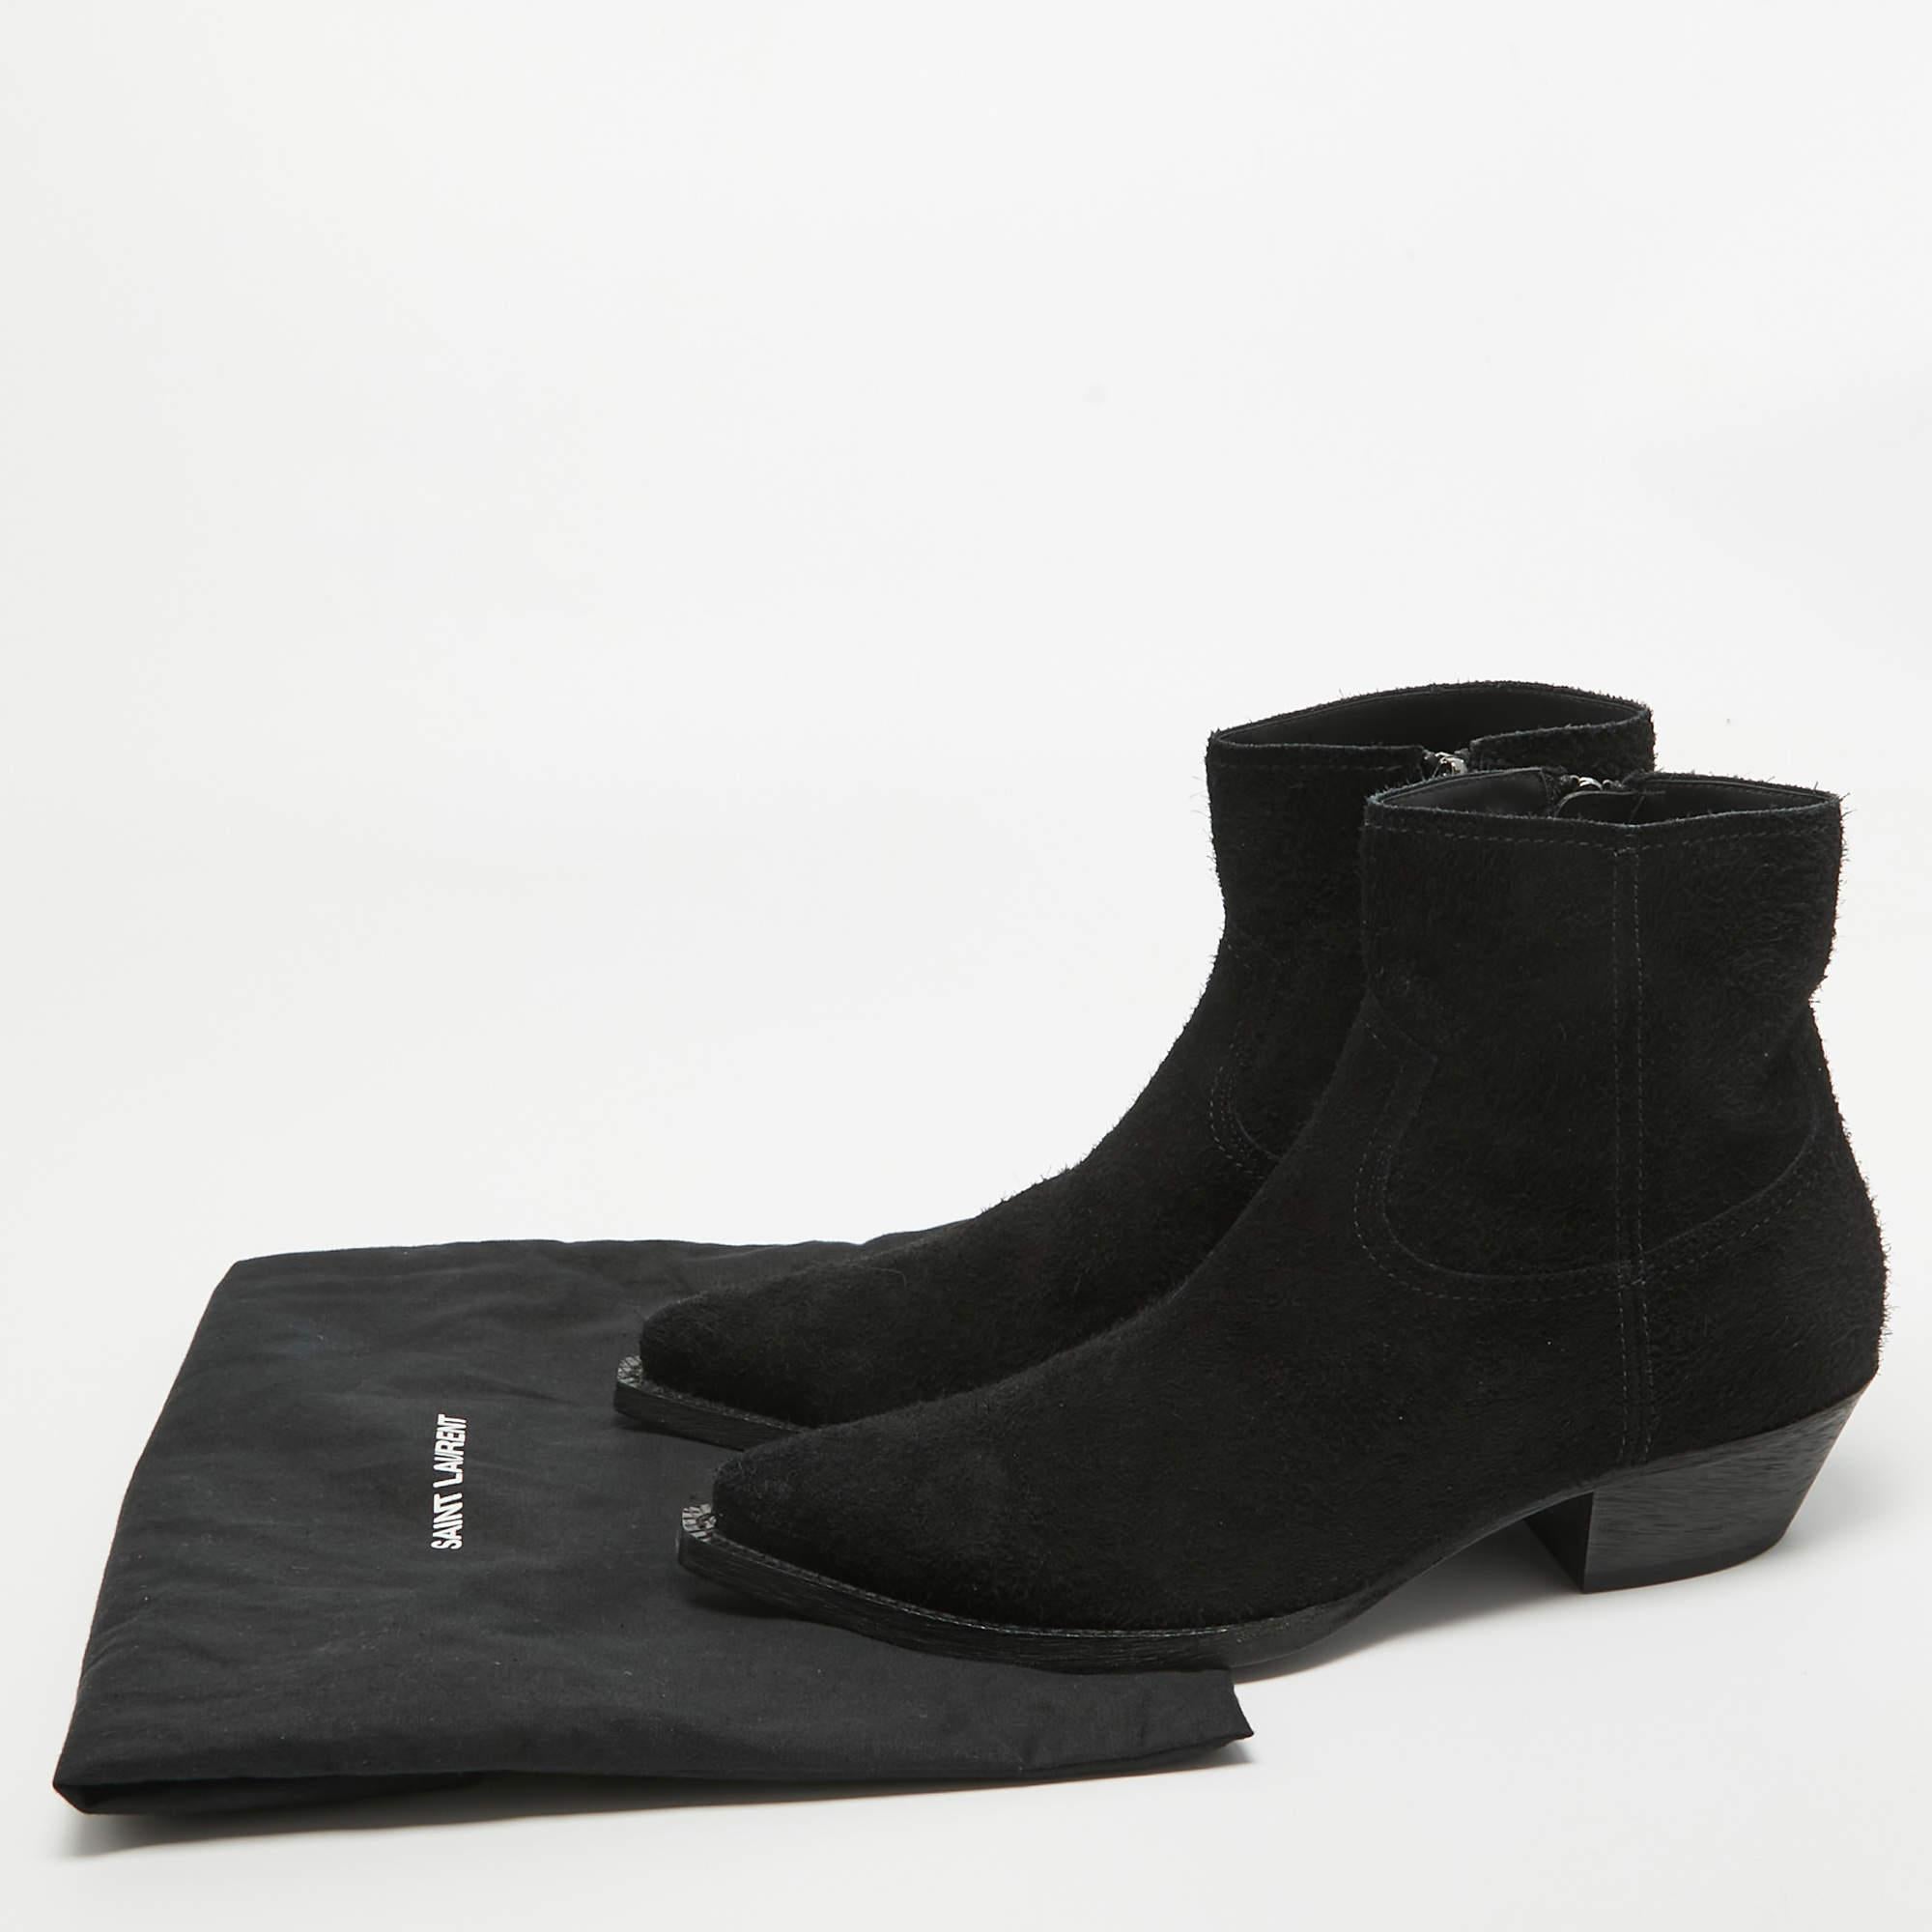 Saint Laurent Black Leather Pointed Toe Boots Size 43 5